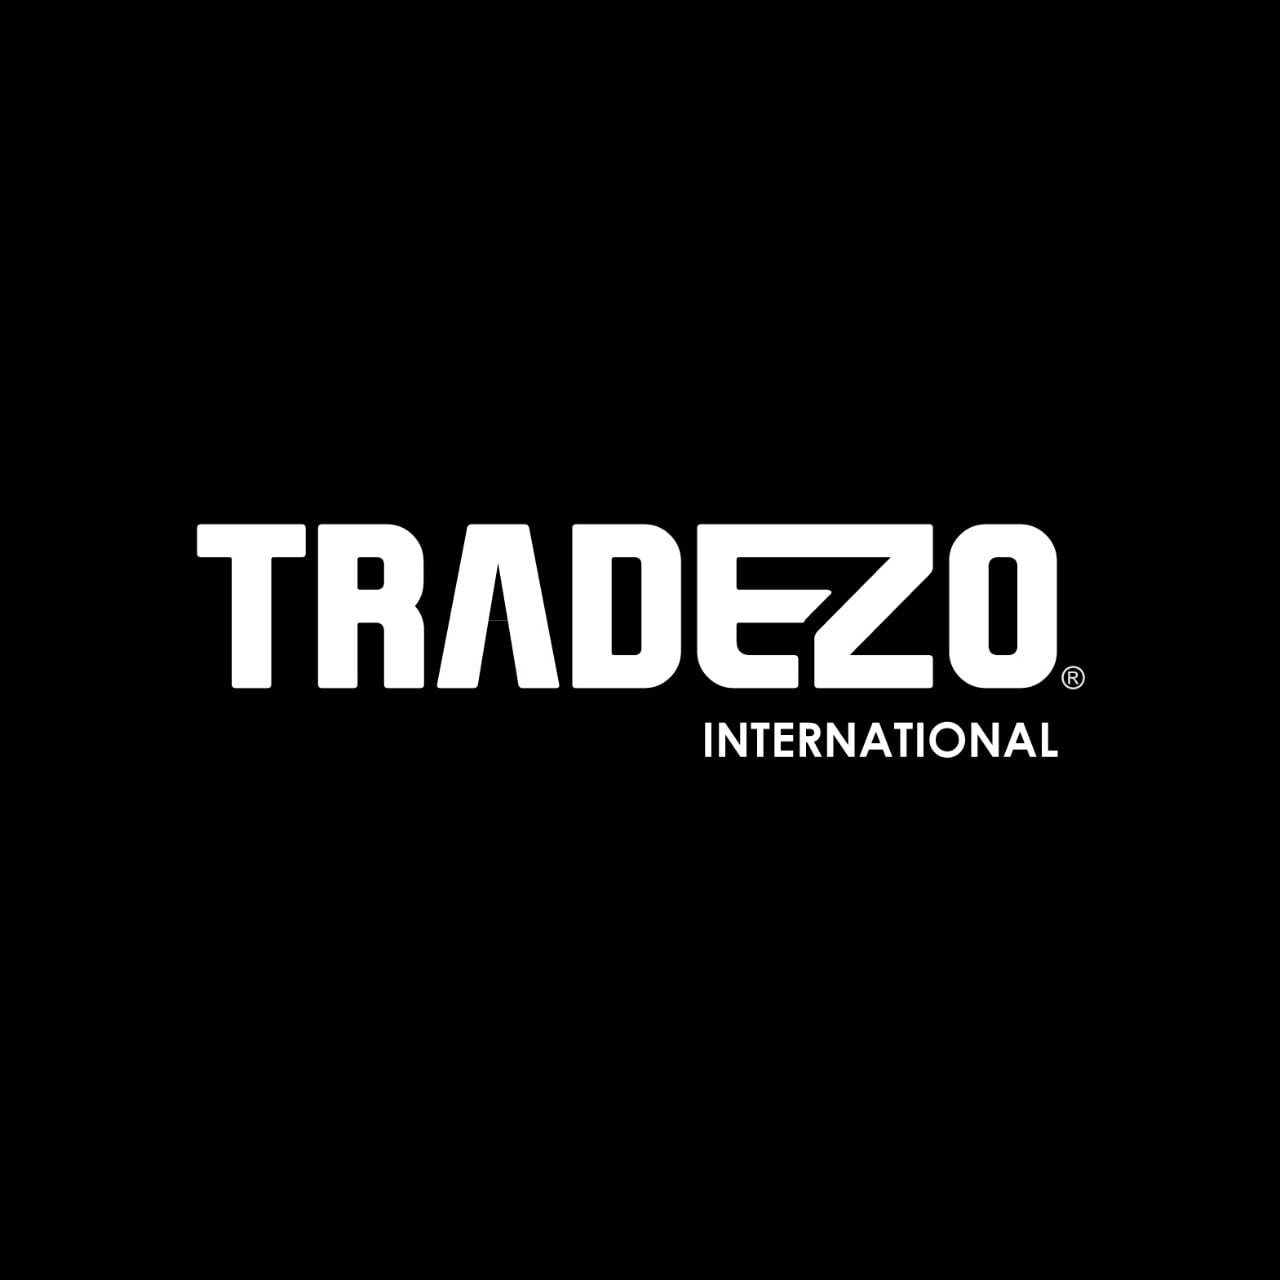 Tradezo International